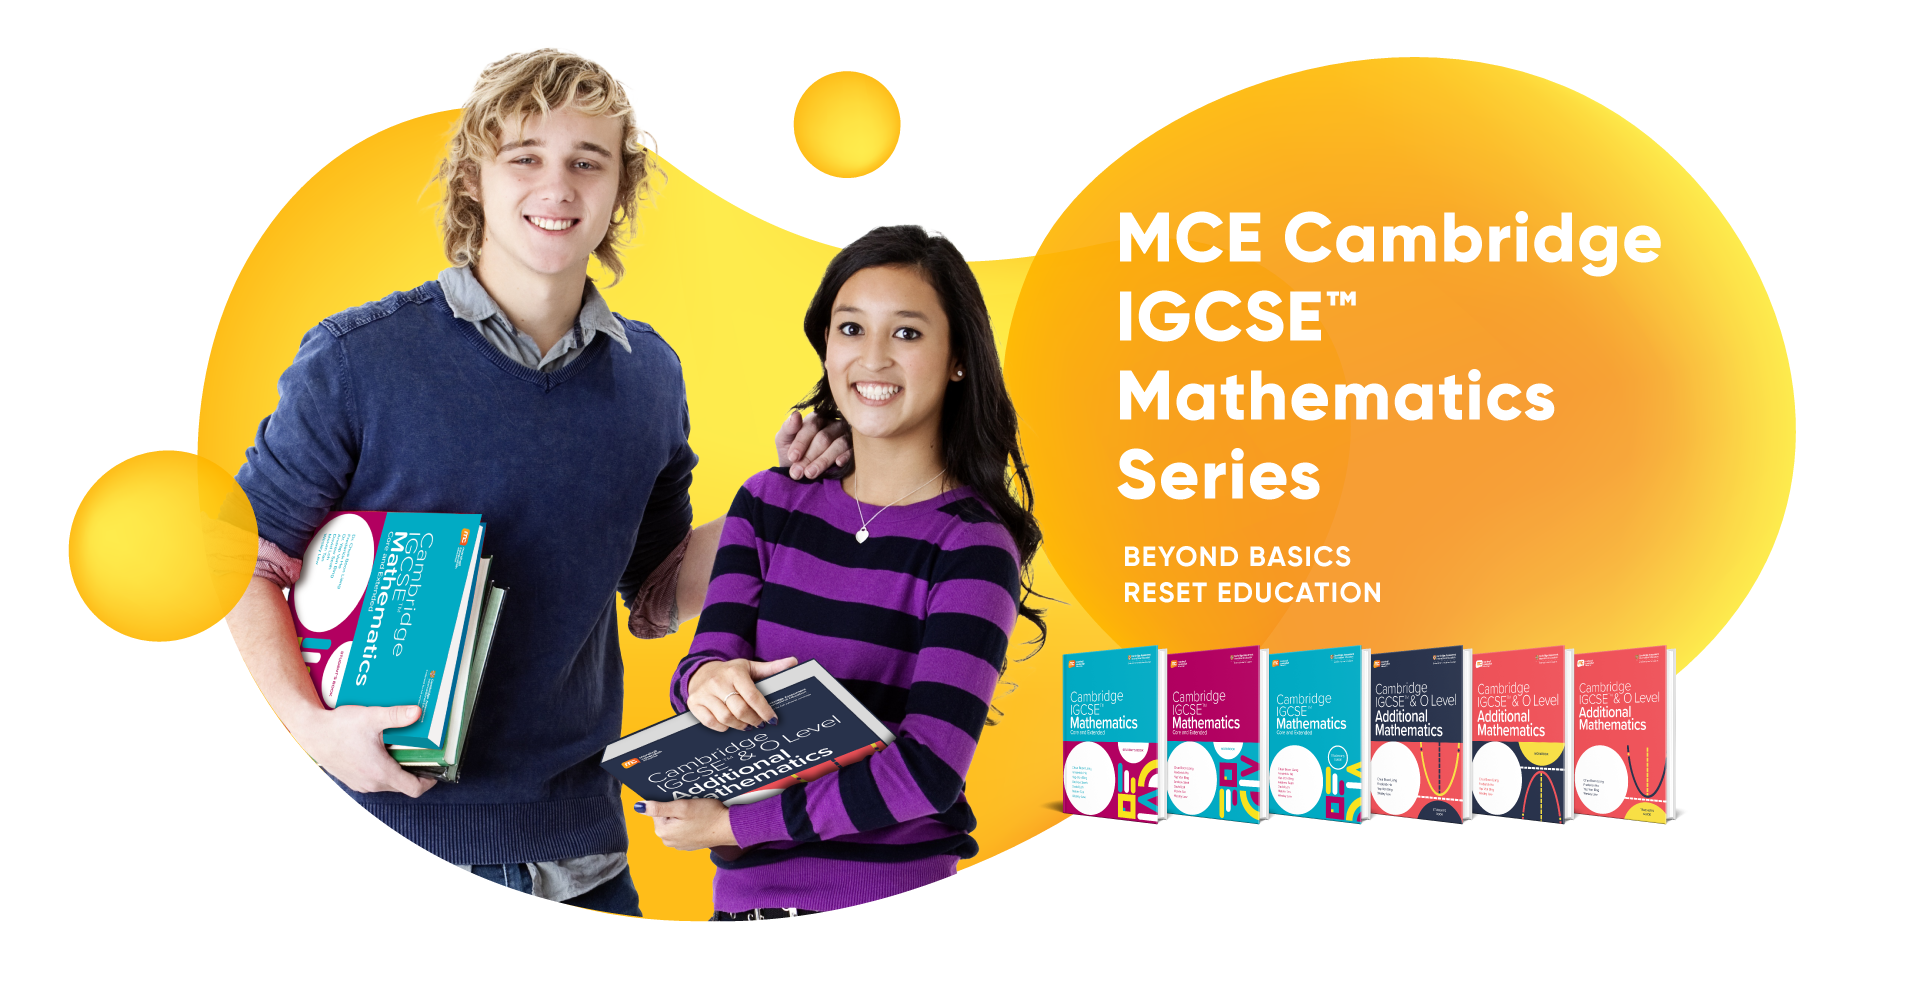 MCE Cambridge IGCSE™ Mathematics